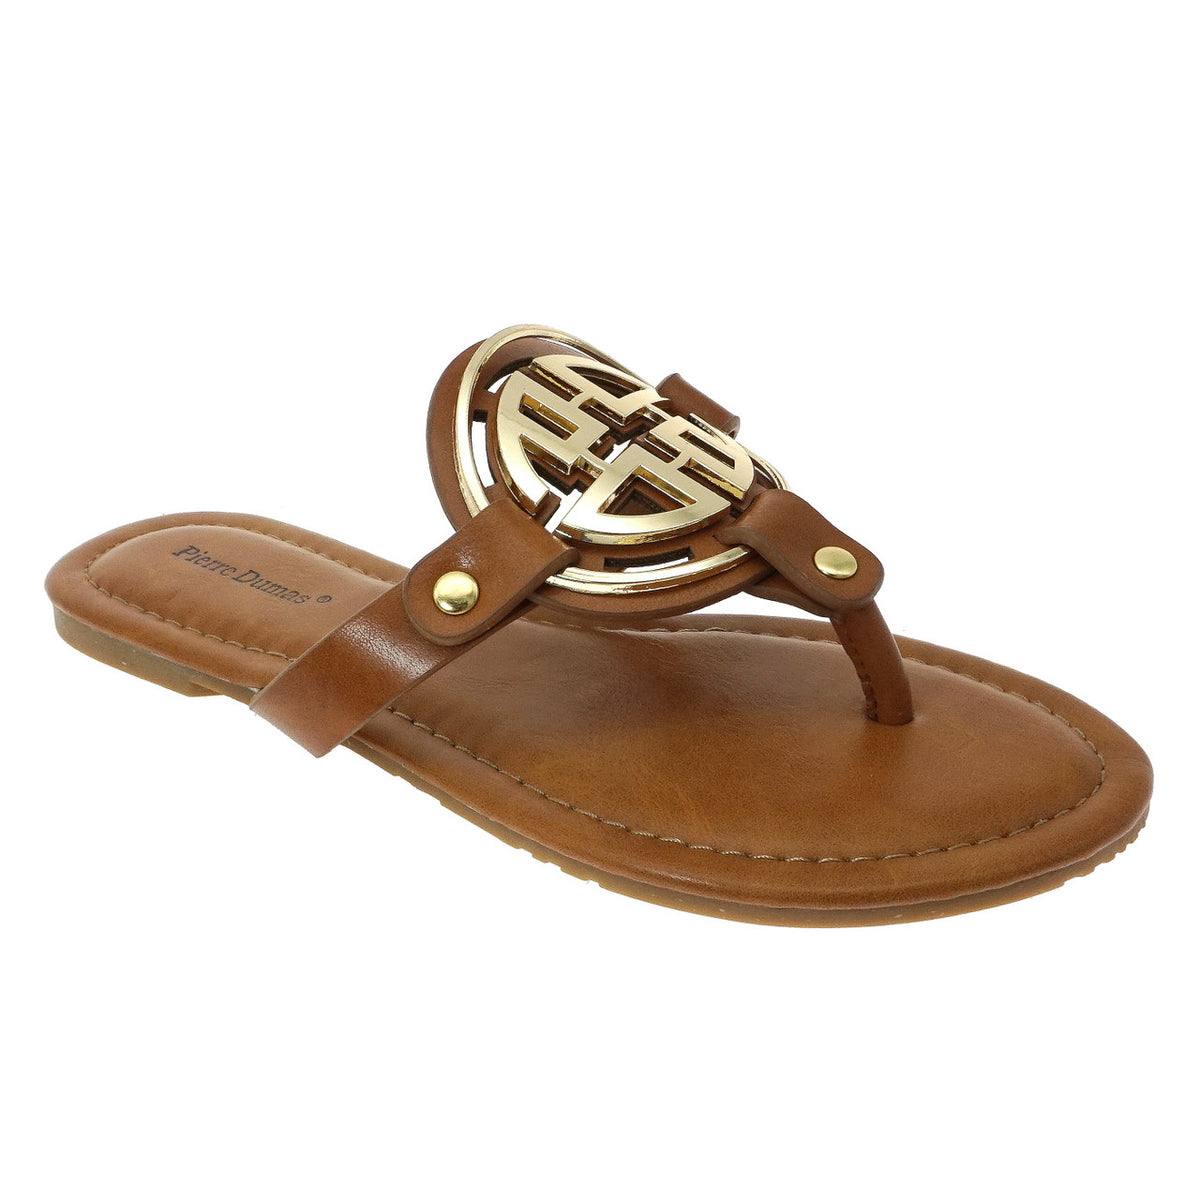 Designer Inspired Sandal (Tan with Gold Design)